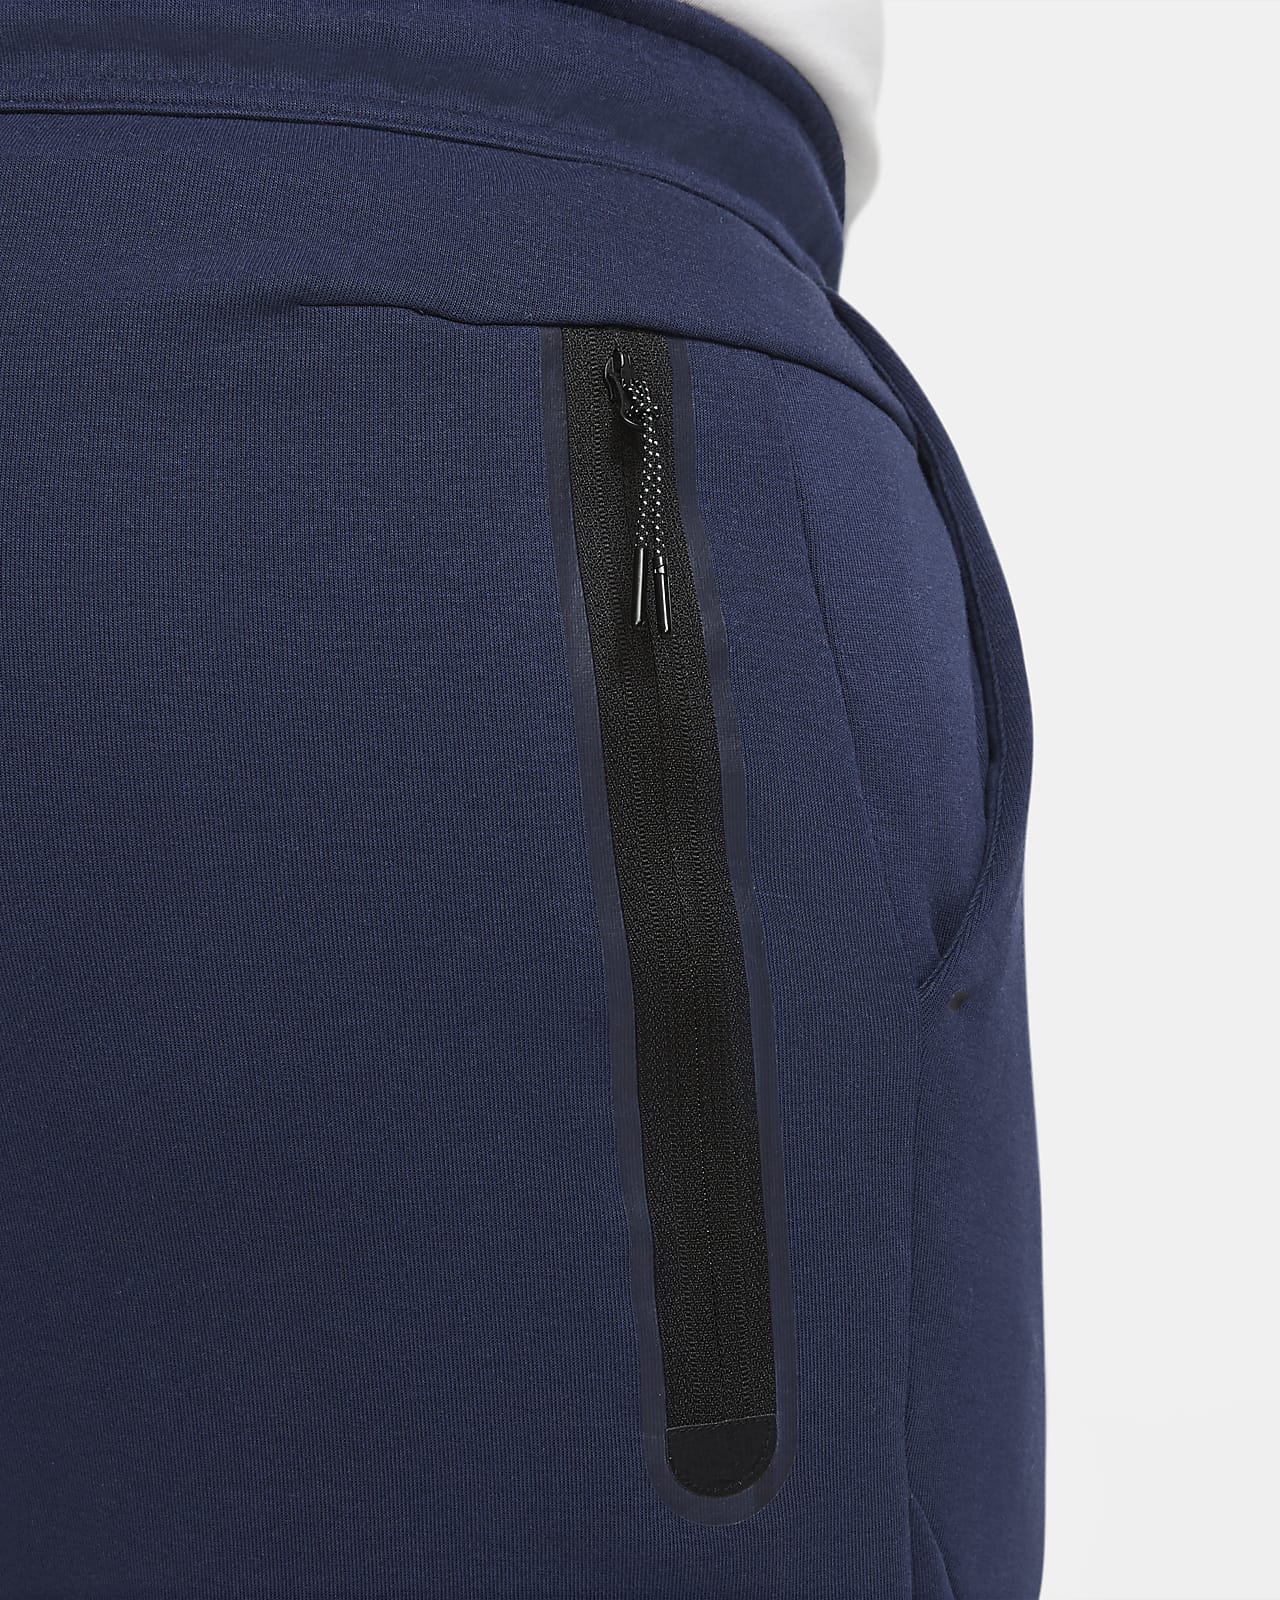 Nike Men's Tech Fleece Jogger Sweatpants in Midnight Navy/Black